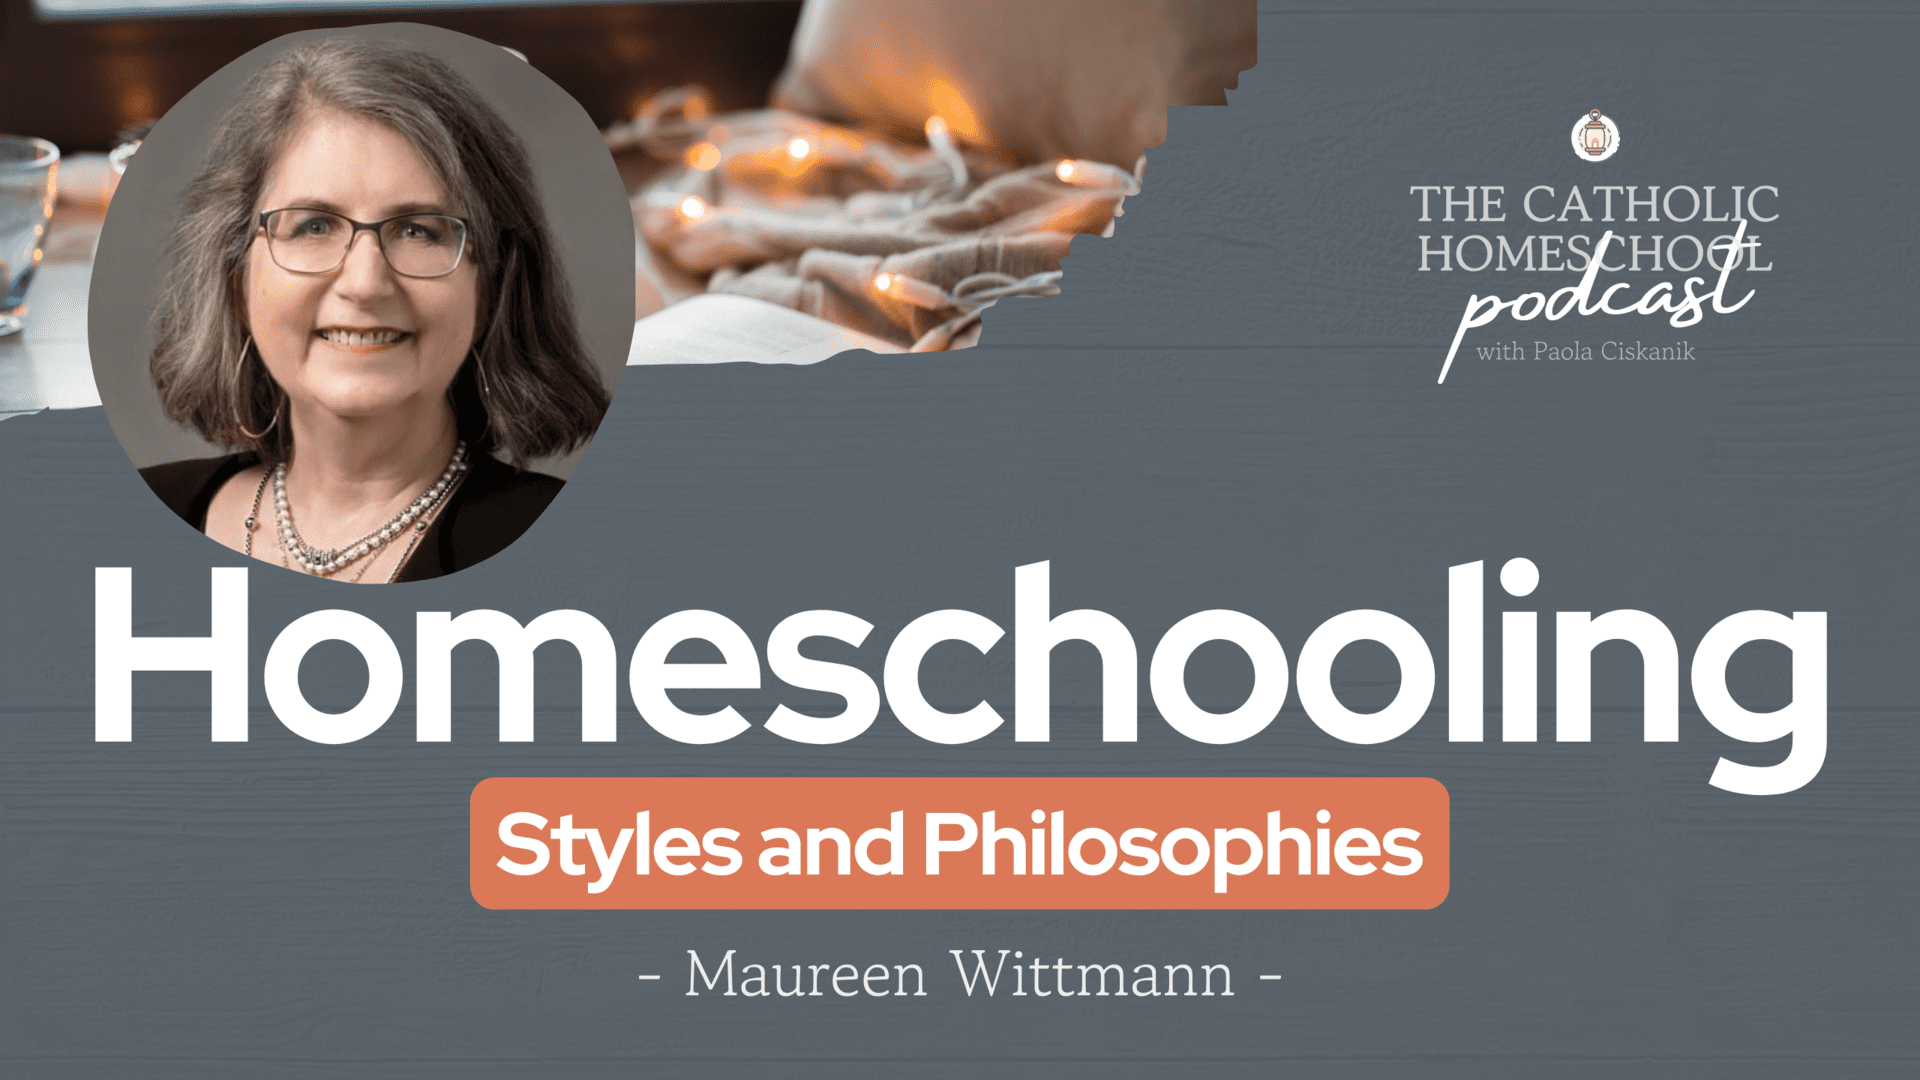 Maureen Wittmann | Homeschooling Styles and Philosophies | The Catholic Homeschool Podcast